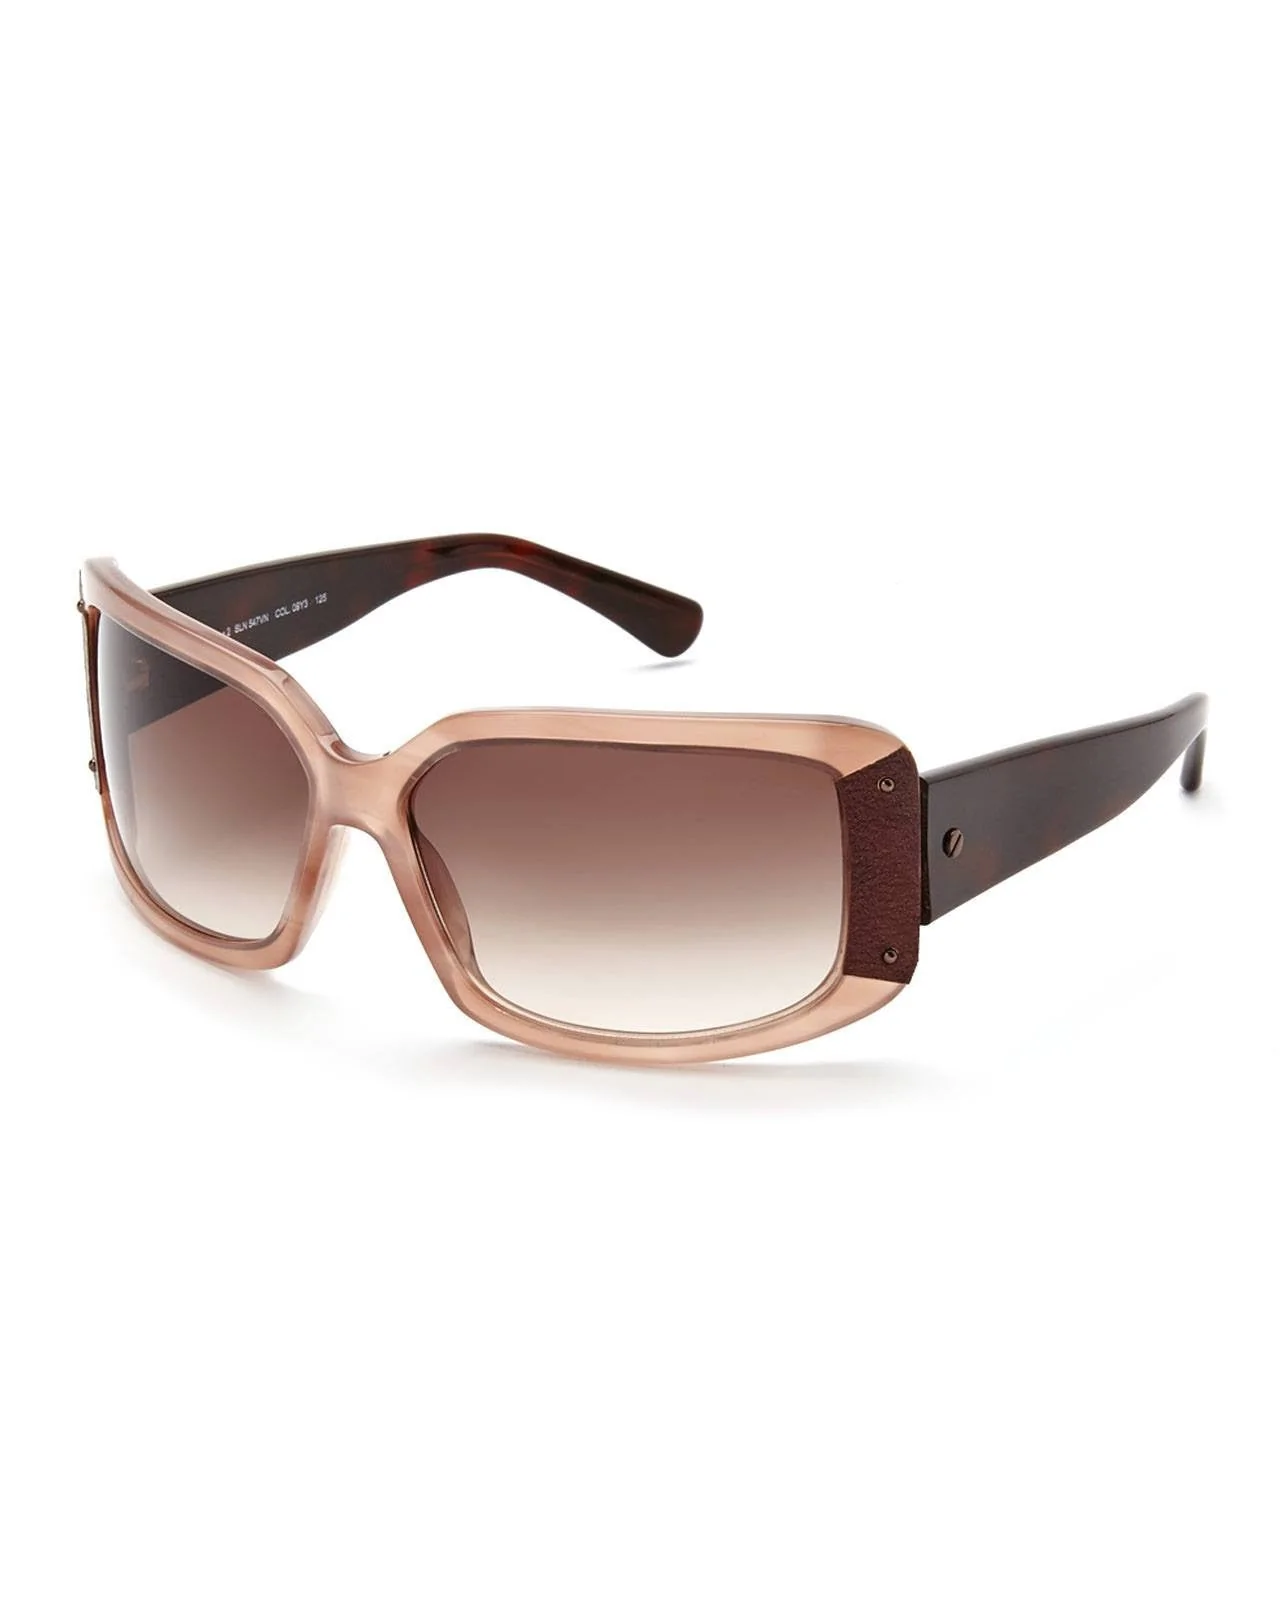 Lanvin Sunglasses SLN547V in Color Pink - Tortoise-LANVIN-Fashionbarn shop